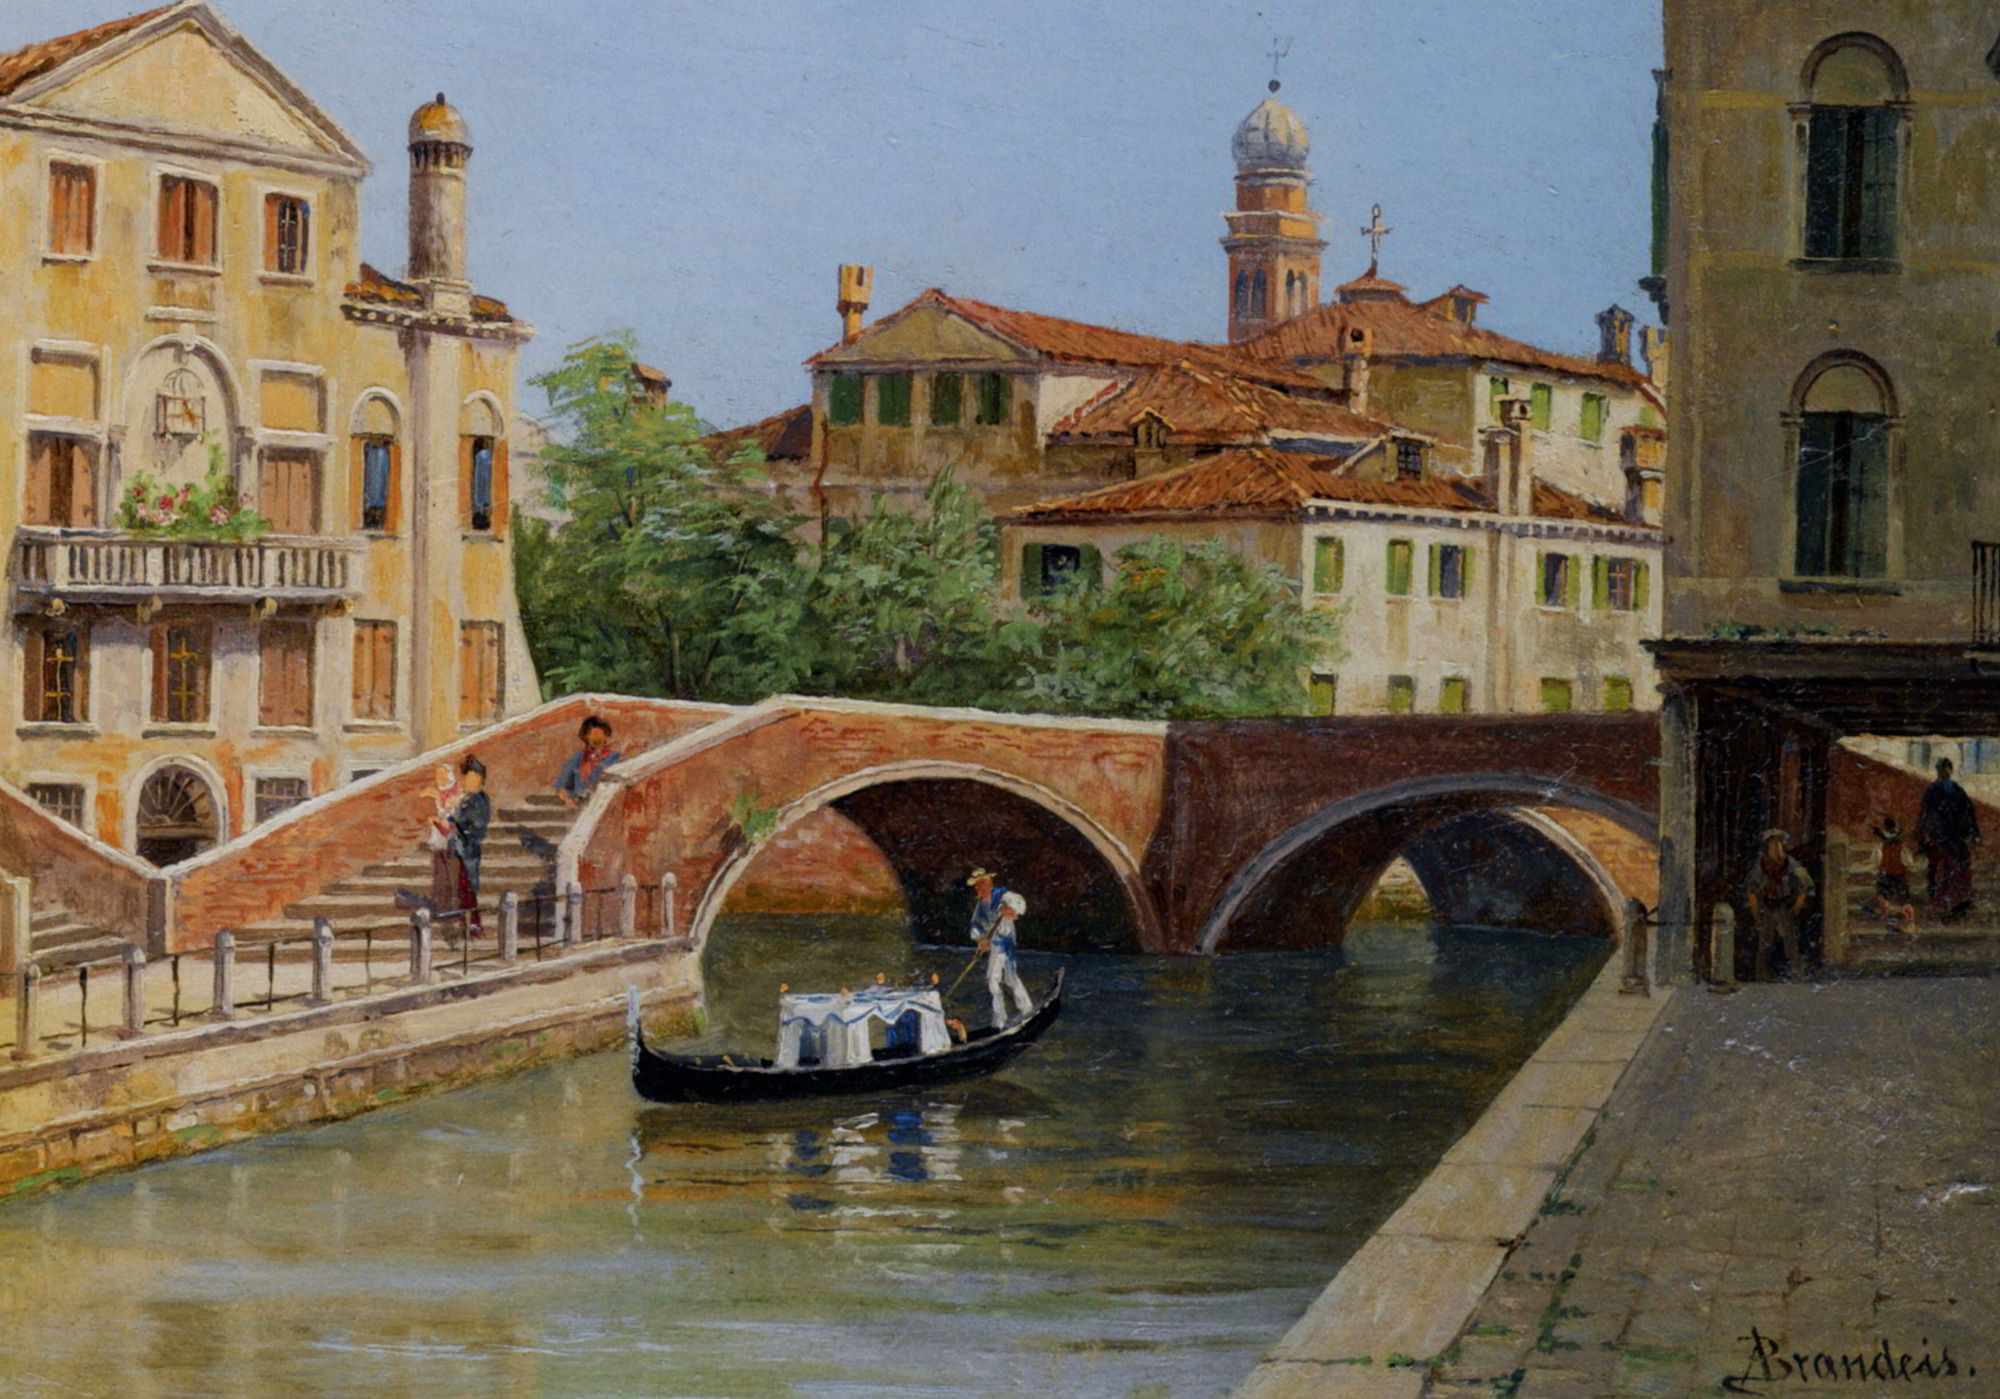 A Venetian Bridge by Antonietta Brandeis